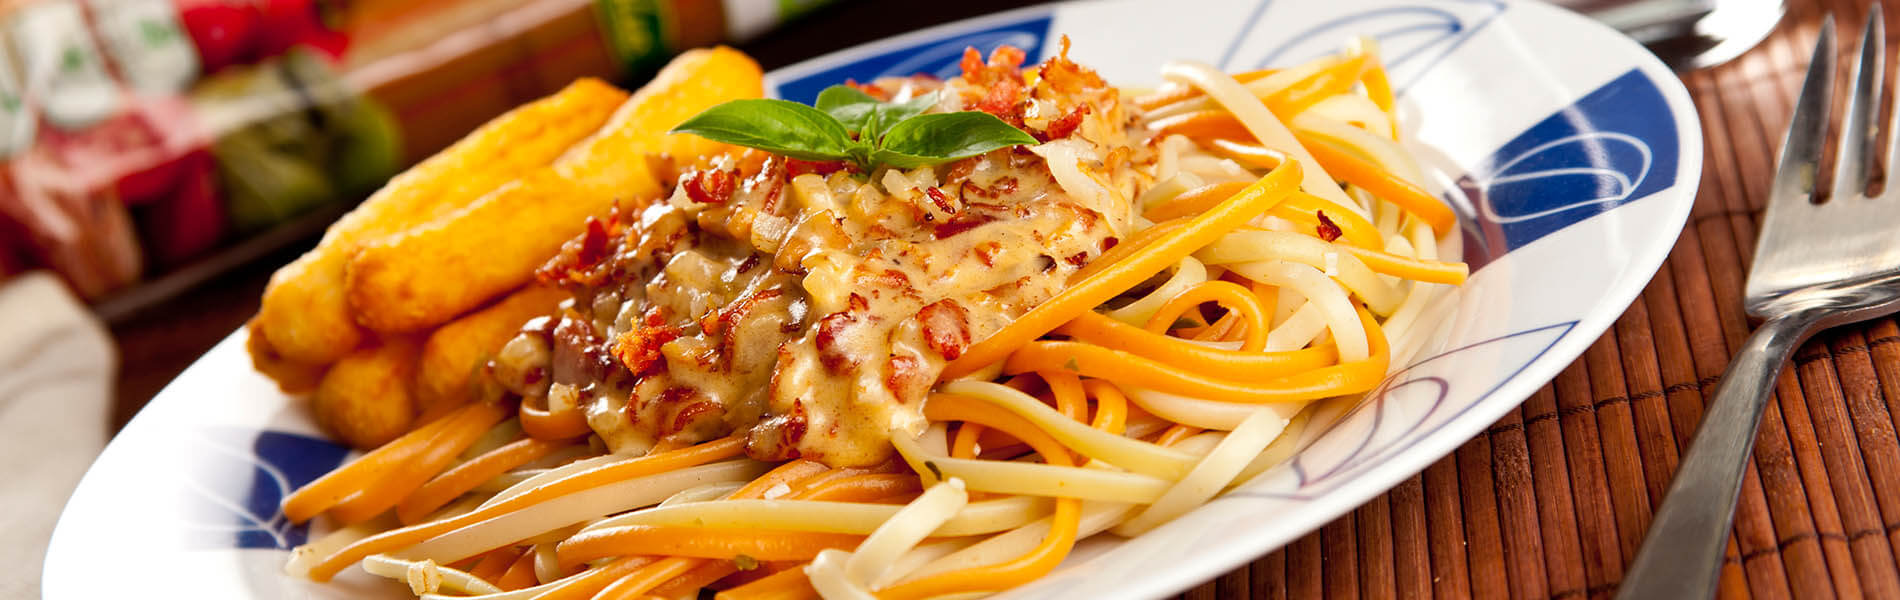 Spaghetti verduras Doria con crema de cebolla y yuquitas fritas